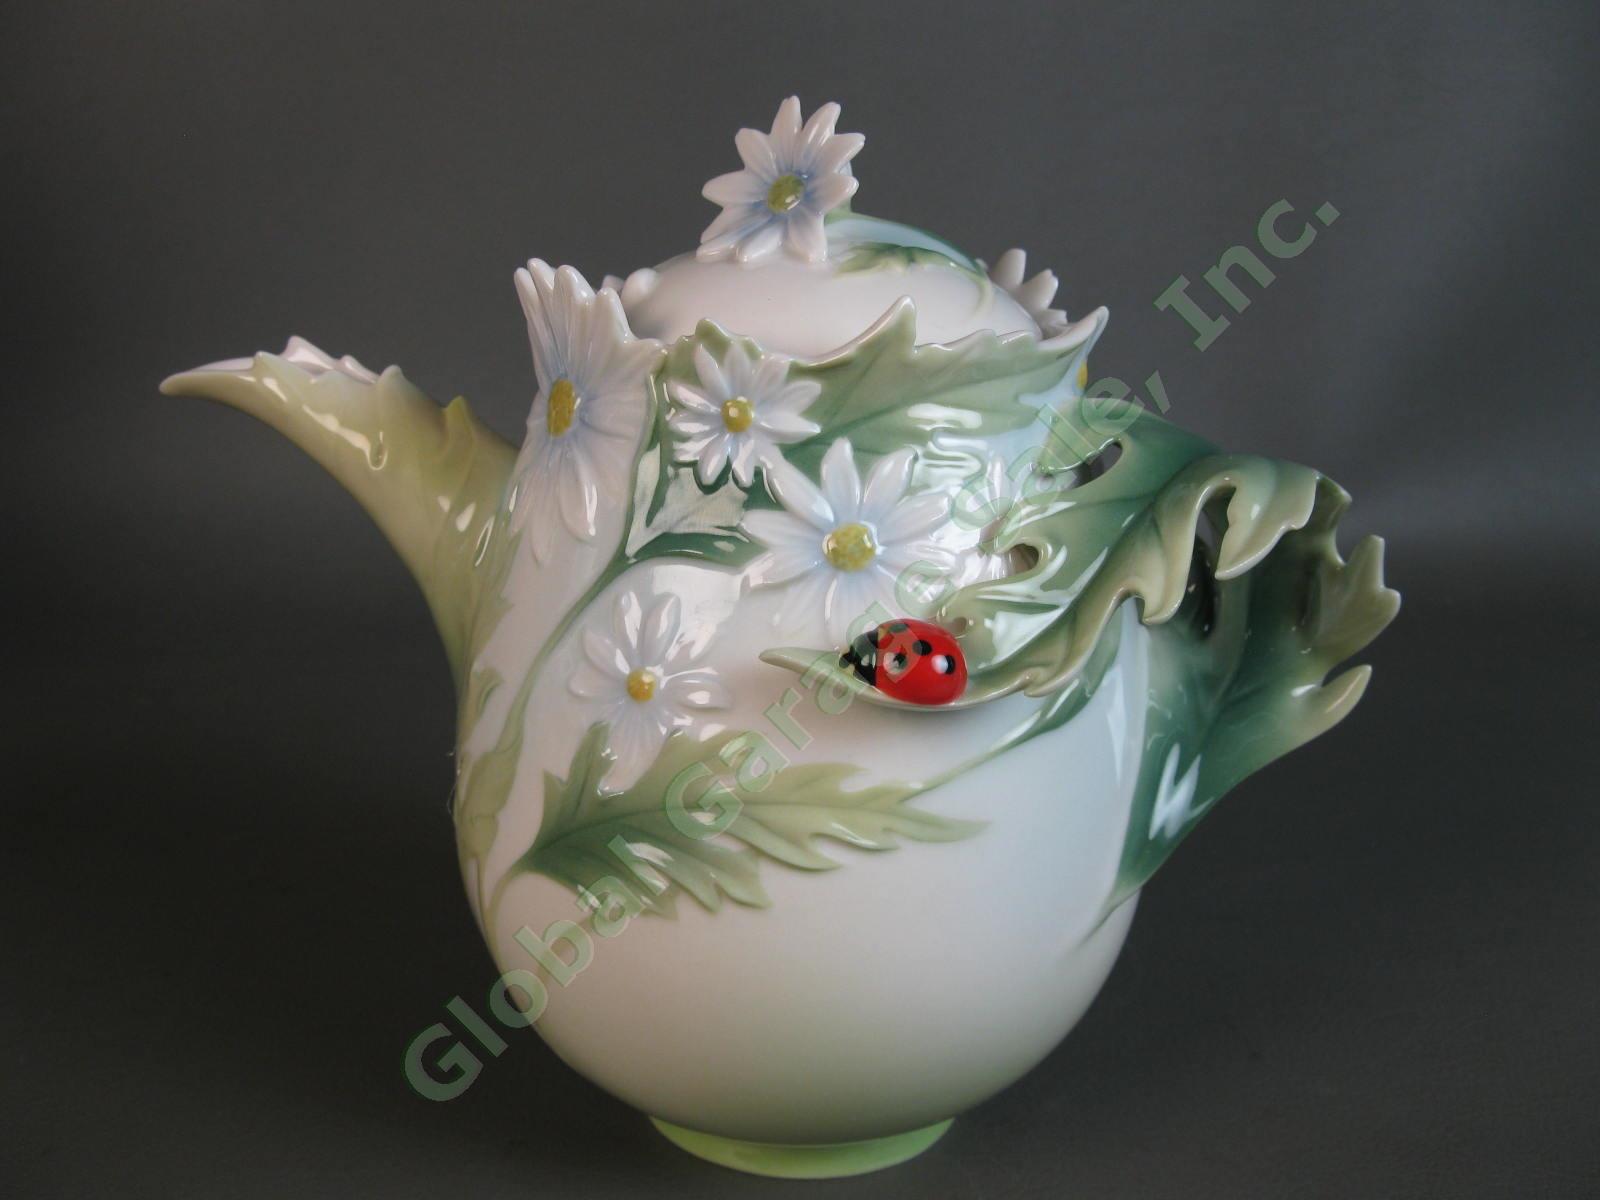 Franz Porcelain Ladybug Design Collection Teapot Cover Coffee Tea Pot FZ00300 NR 2